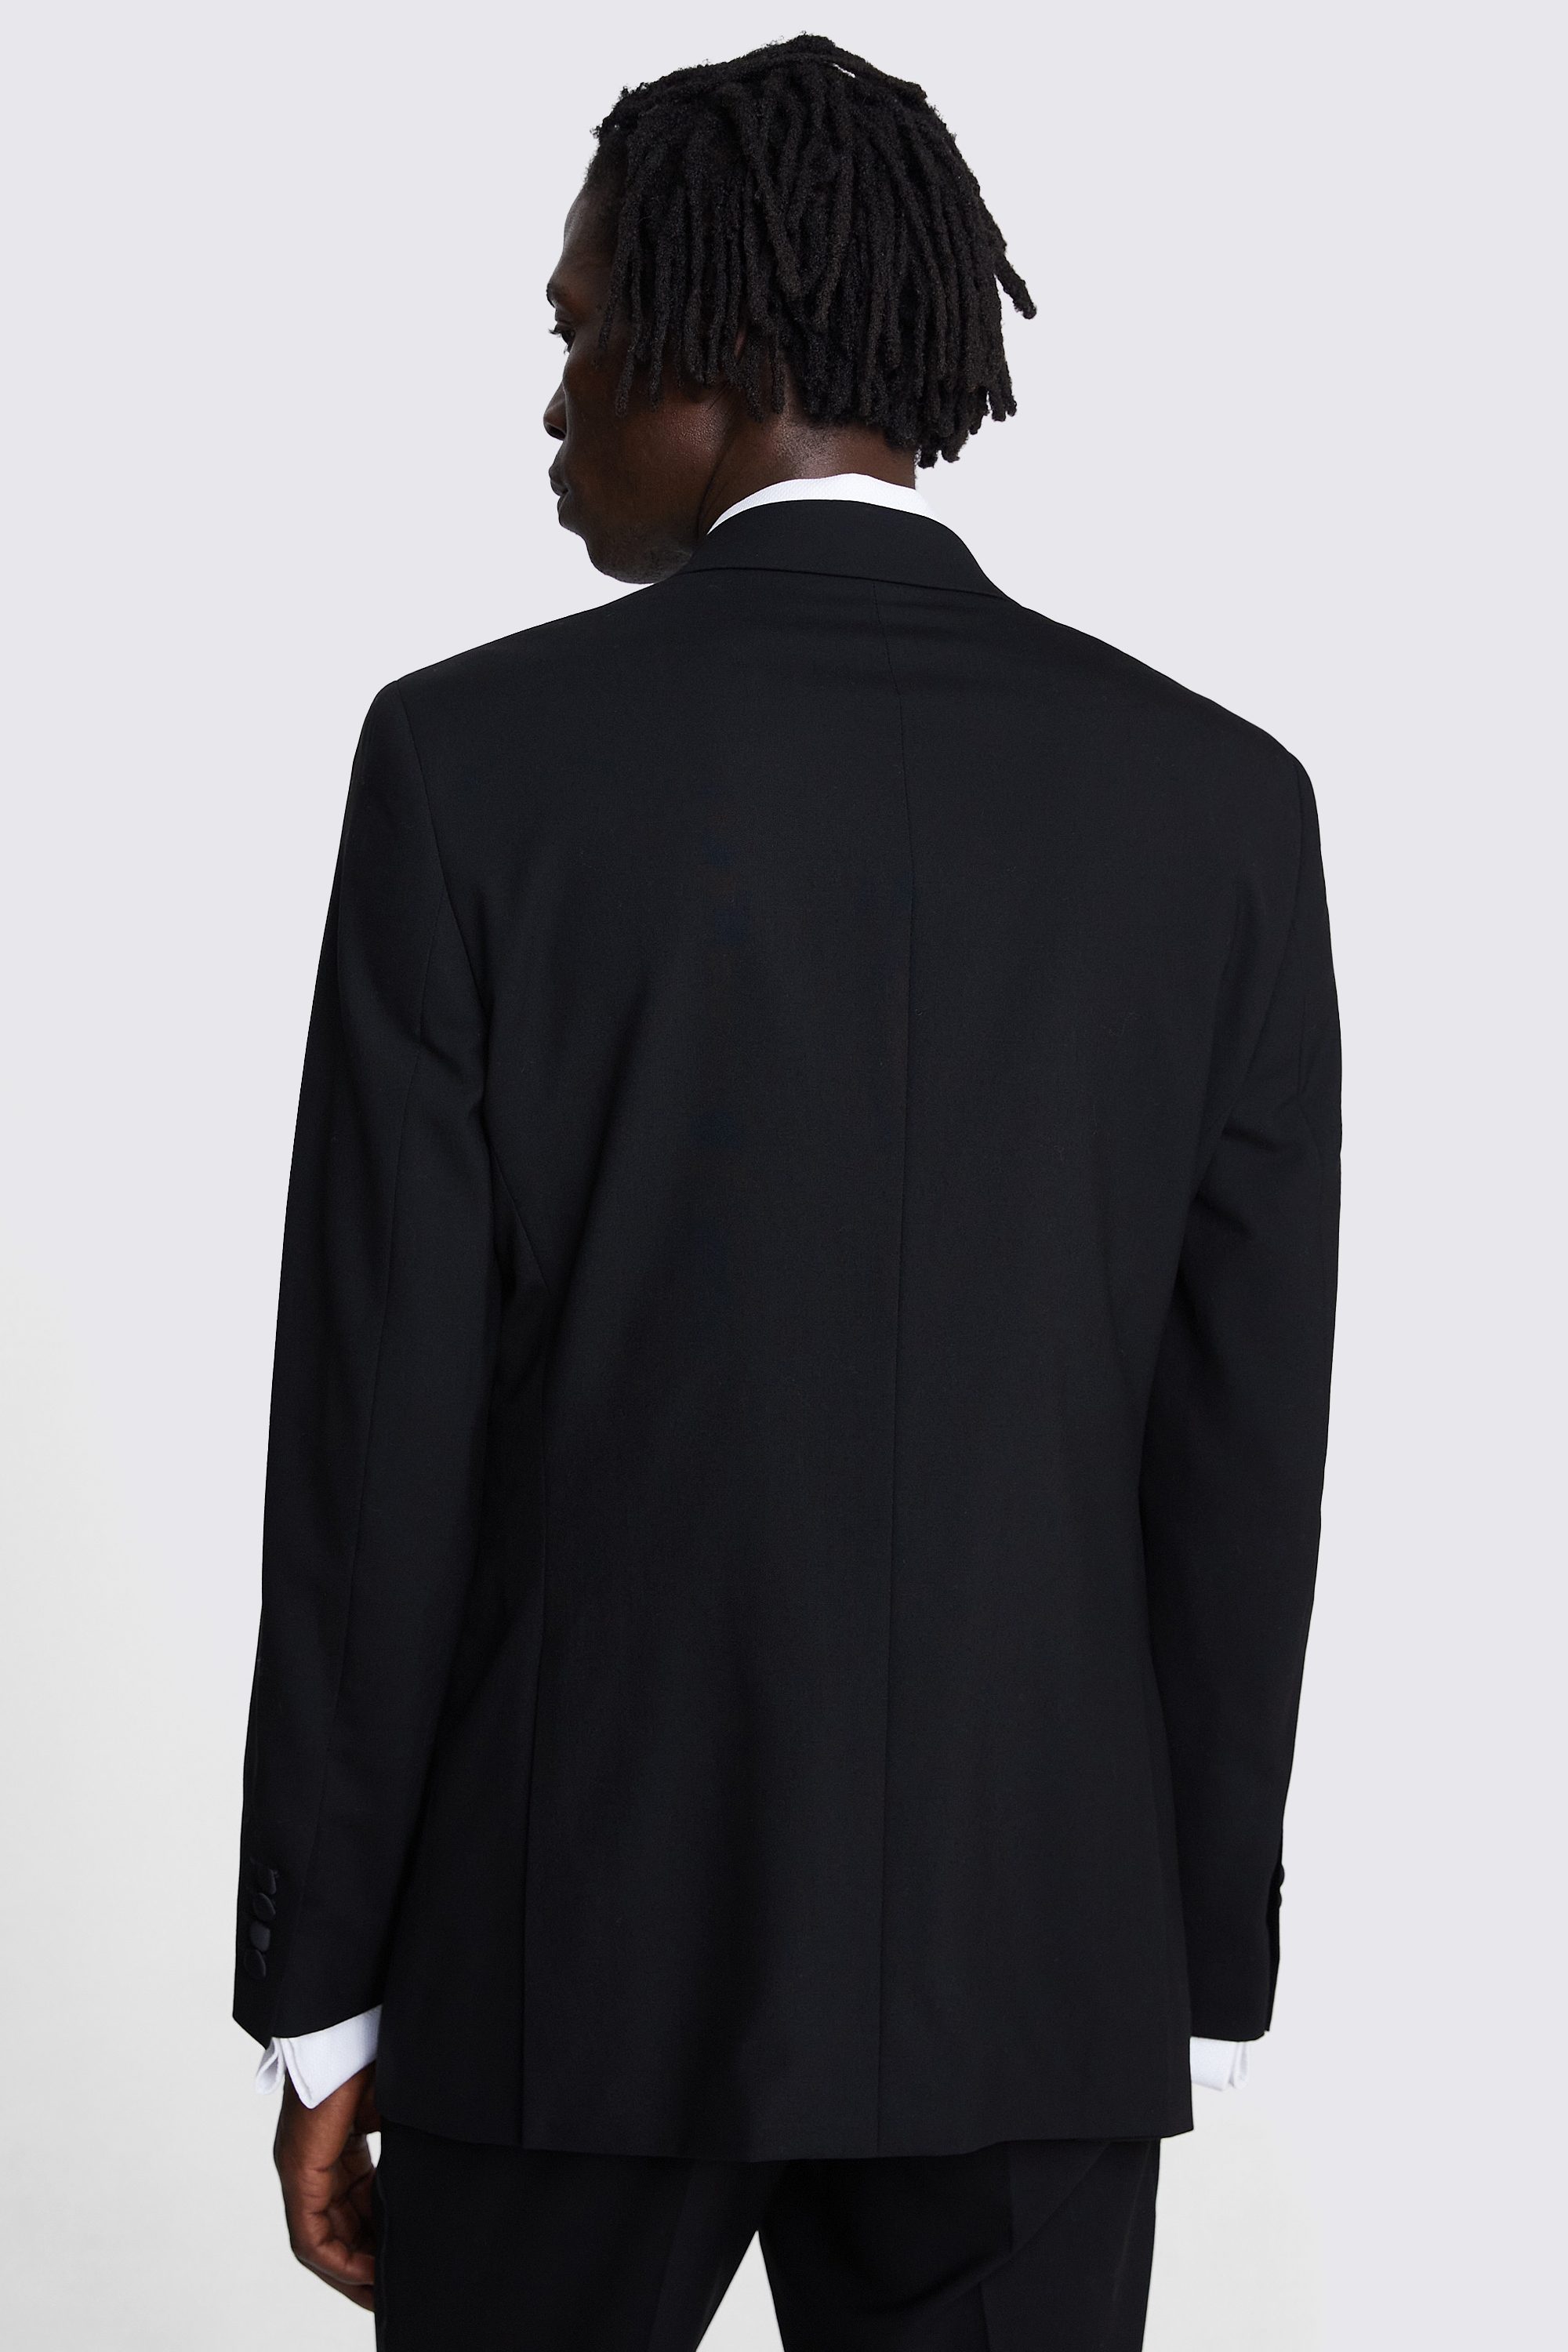 Tailored Fit Black Peak Lapel Wool Tuxedo Jacket | Buy Online at Moss